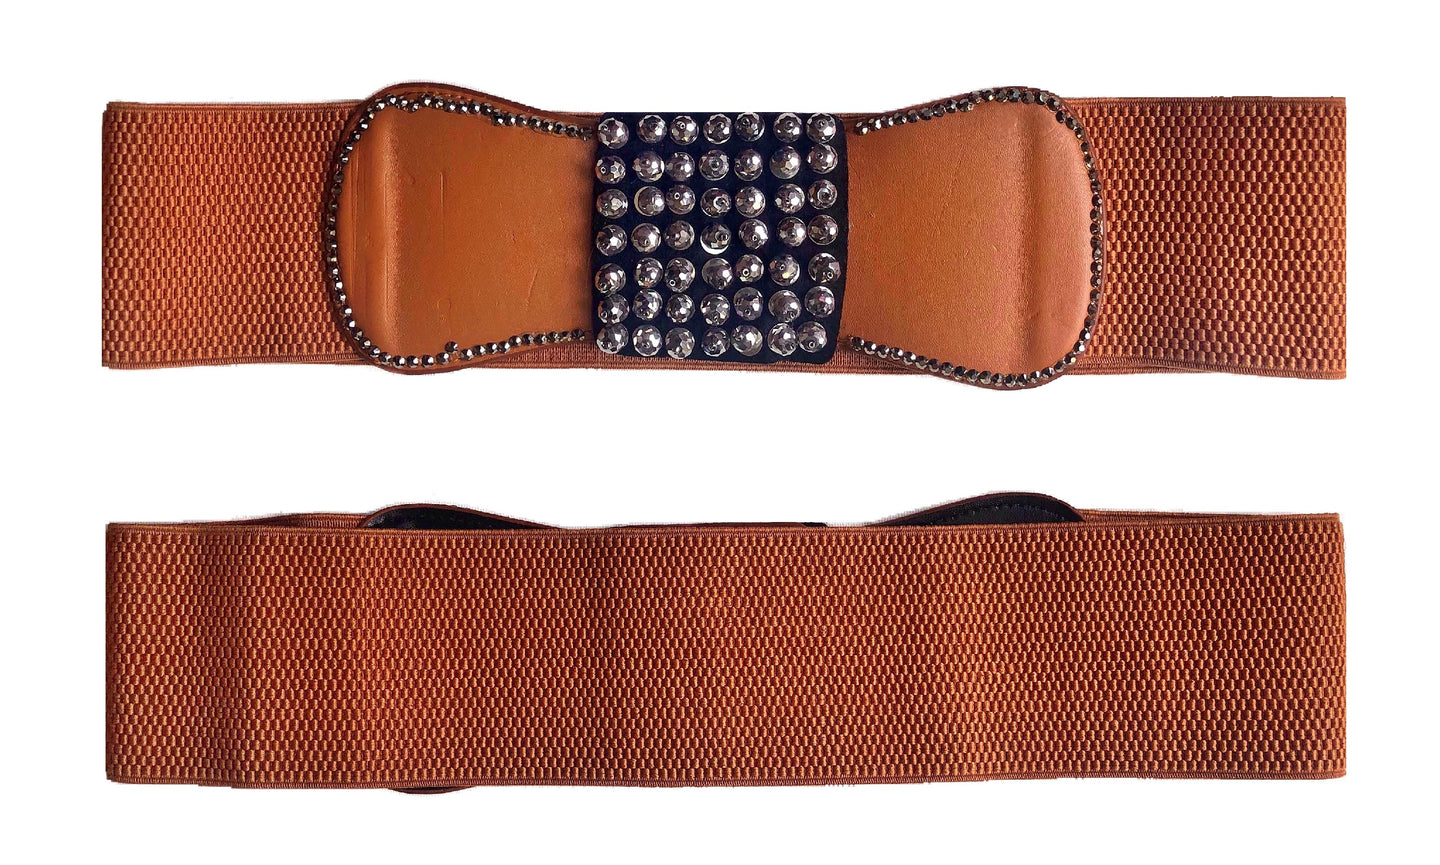 Stretchy & Adjustable 3 Inch Wide Waist Belt